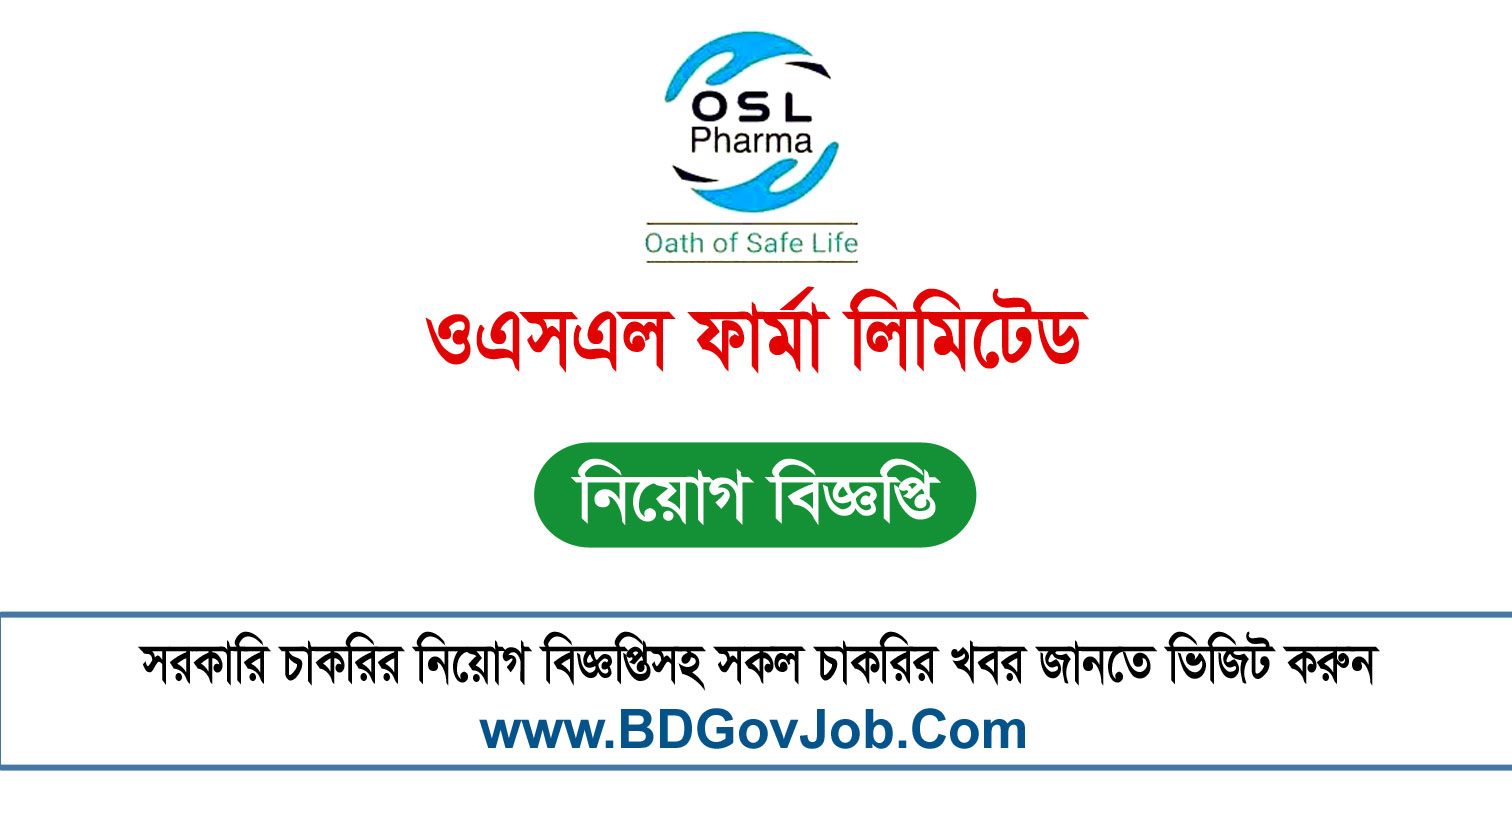 OSL Pharma Limited Job Circular 2023